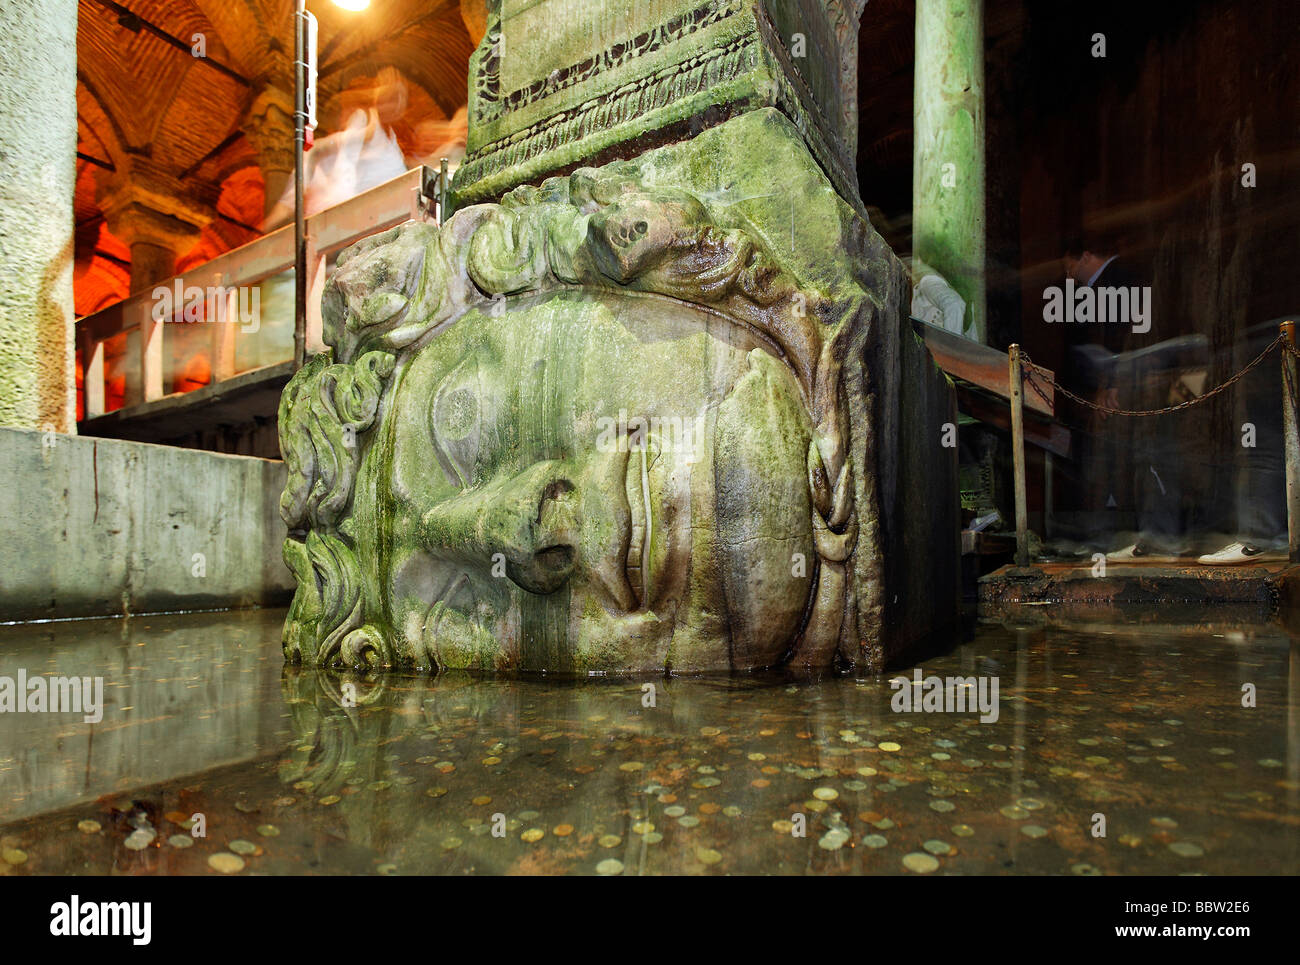 Monumental head of a medusa at the foot of a column, Yerebatan Sarayi, Byzantine cistern, Sultanahmet, Istanbul, Turkey Stock Photo